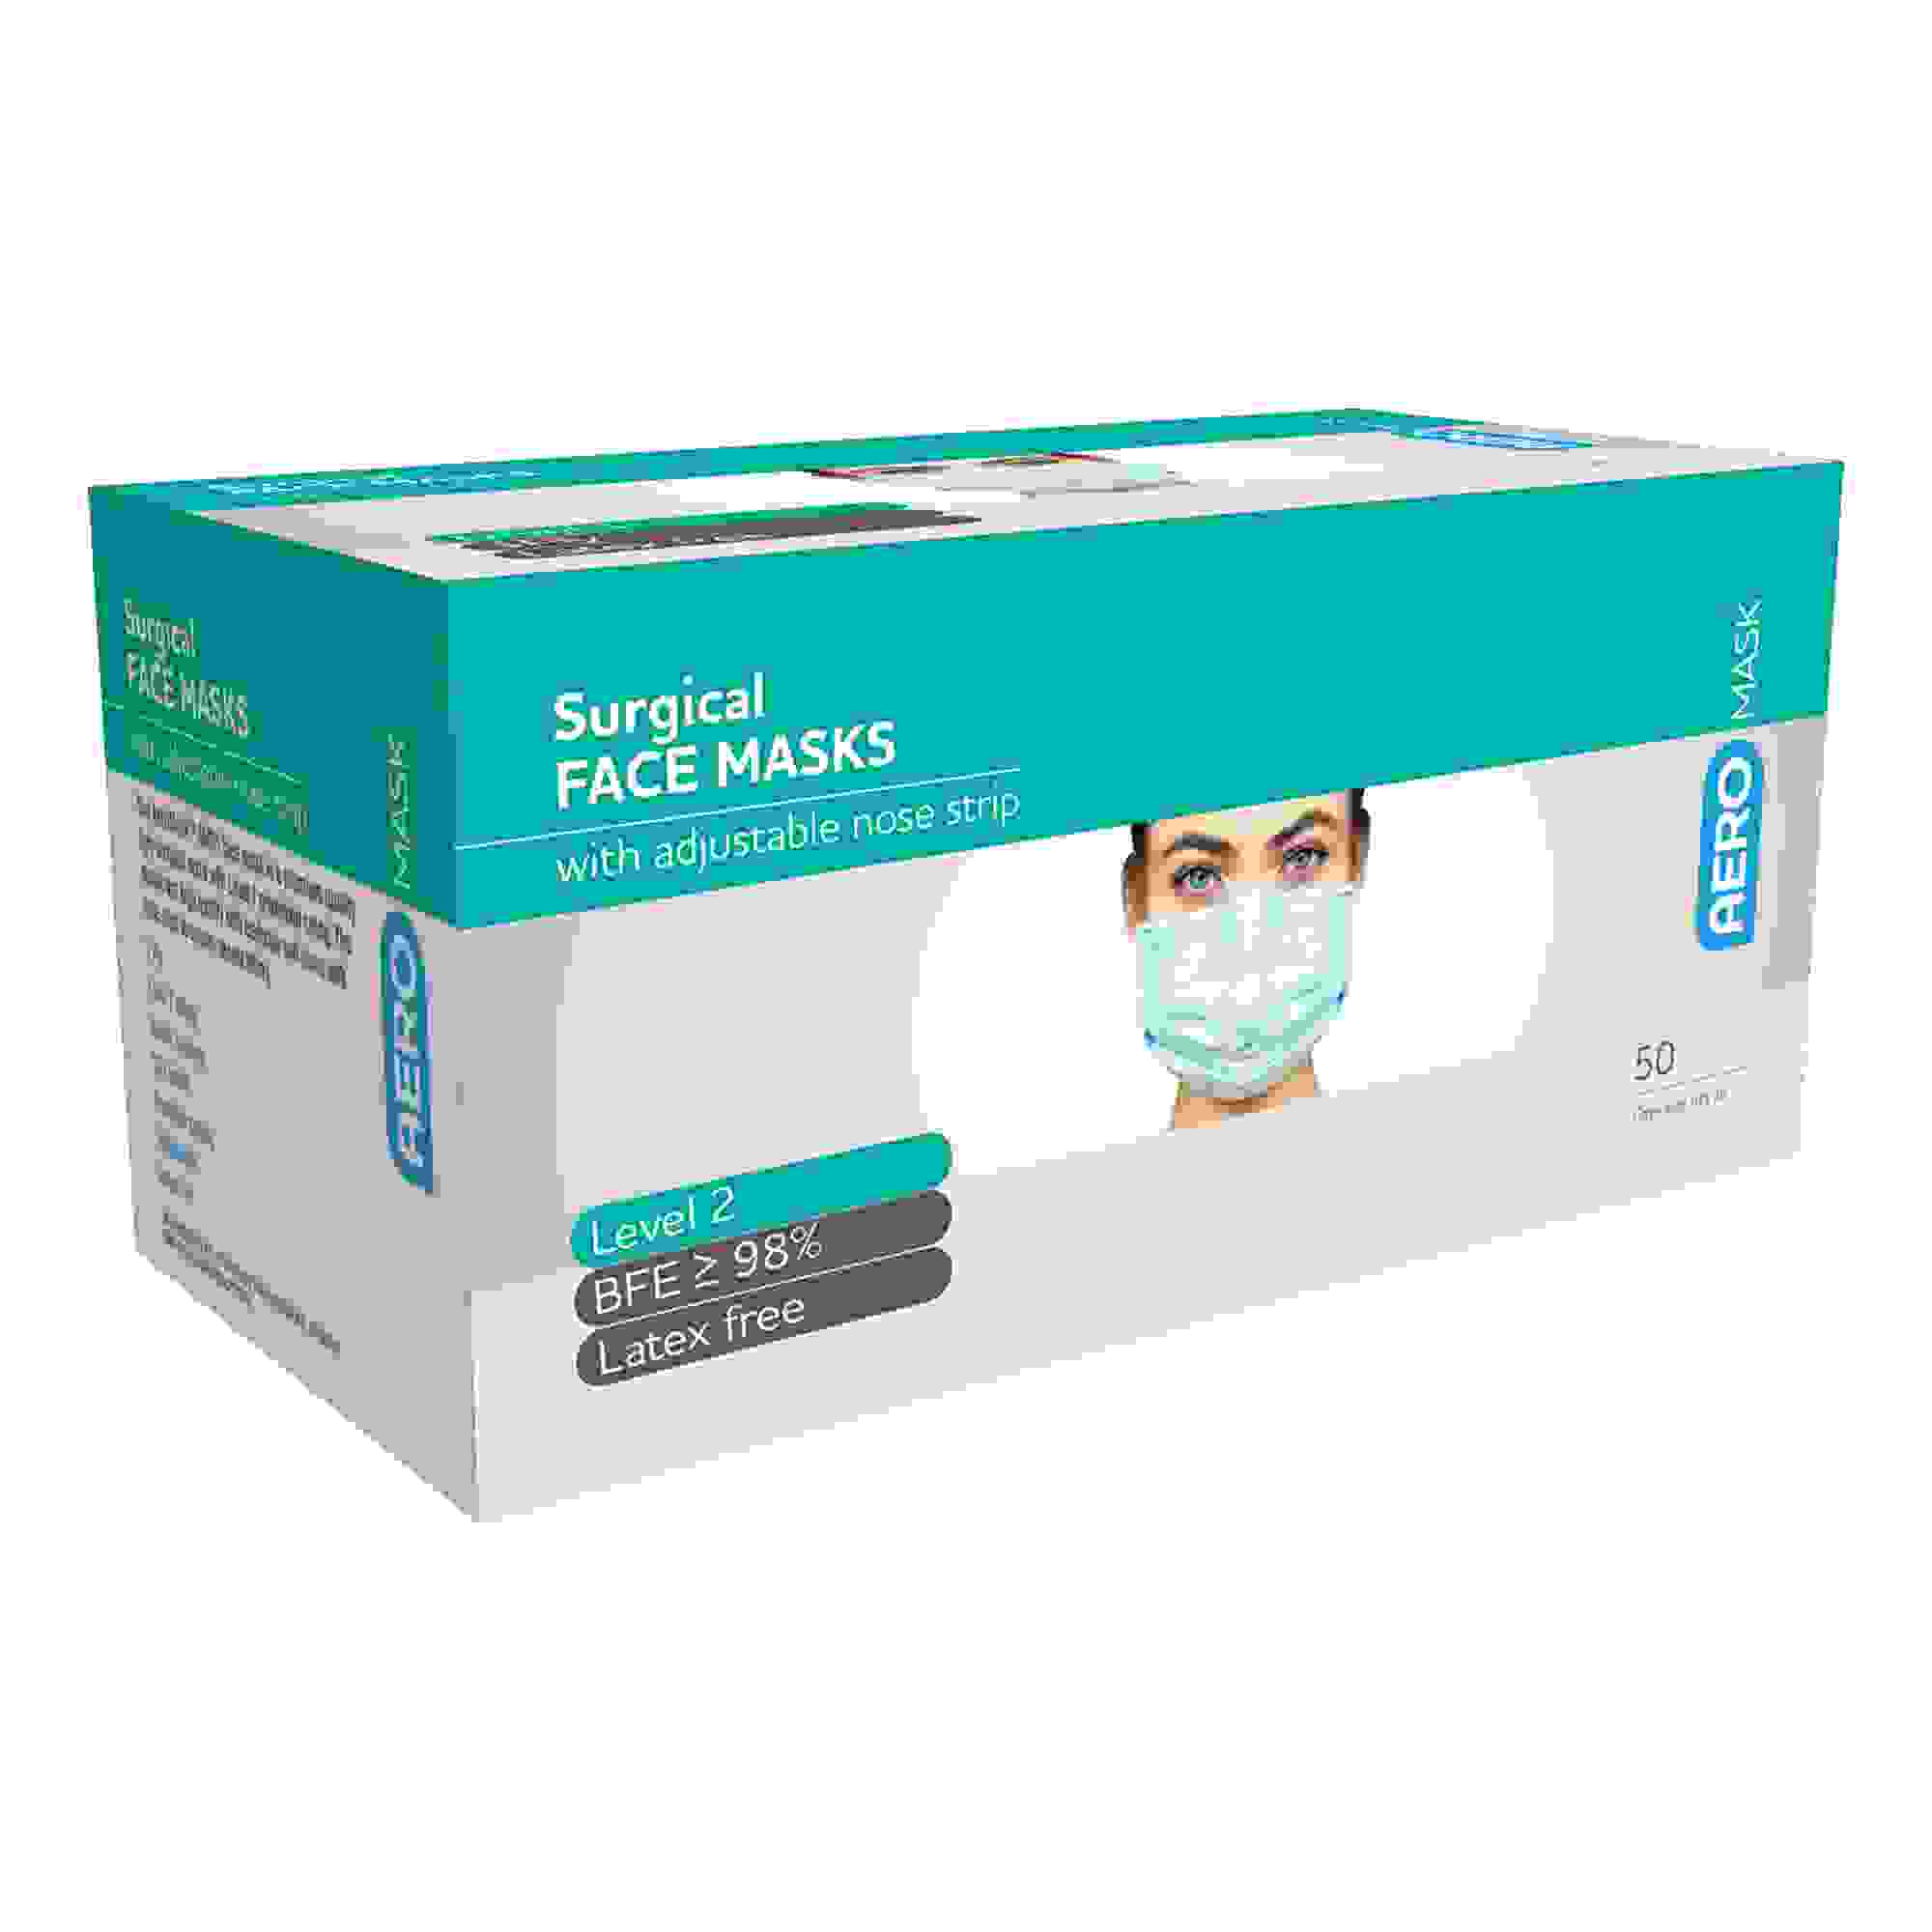 Level 2 Surgical Masks (Box of 50)